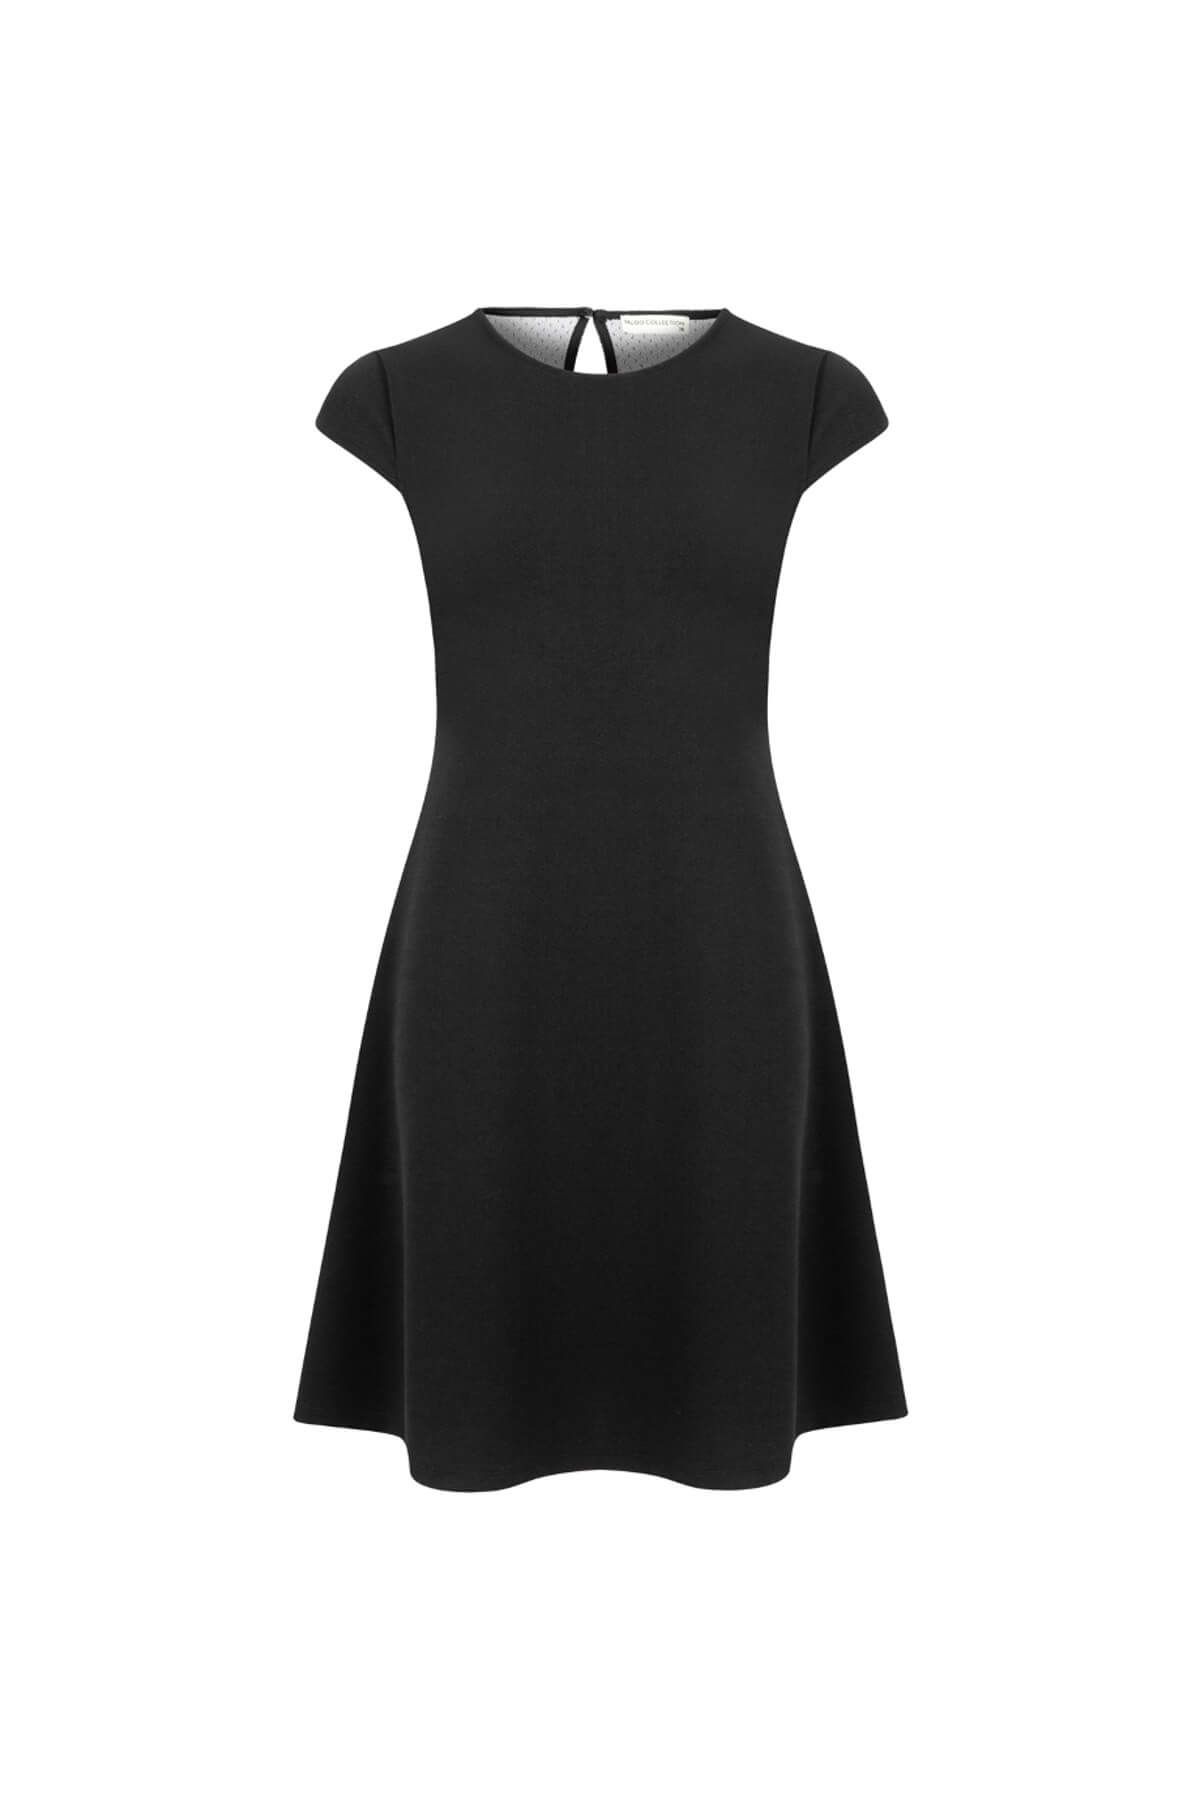 Mudo Kadın Siyah Sırt Detaylı A Form Elbise 1199735